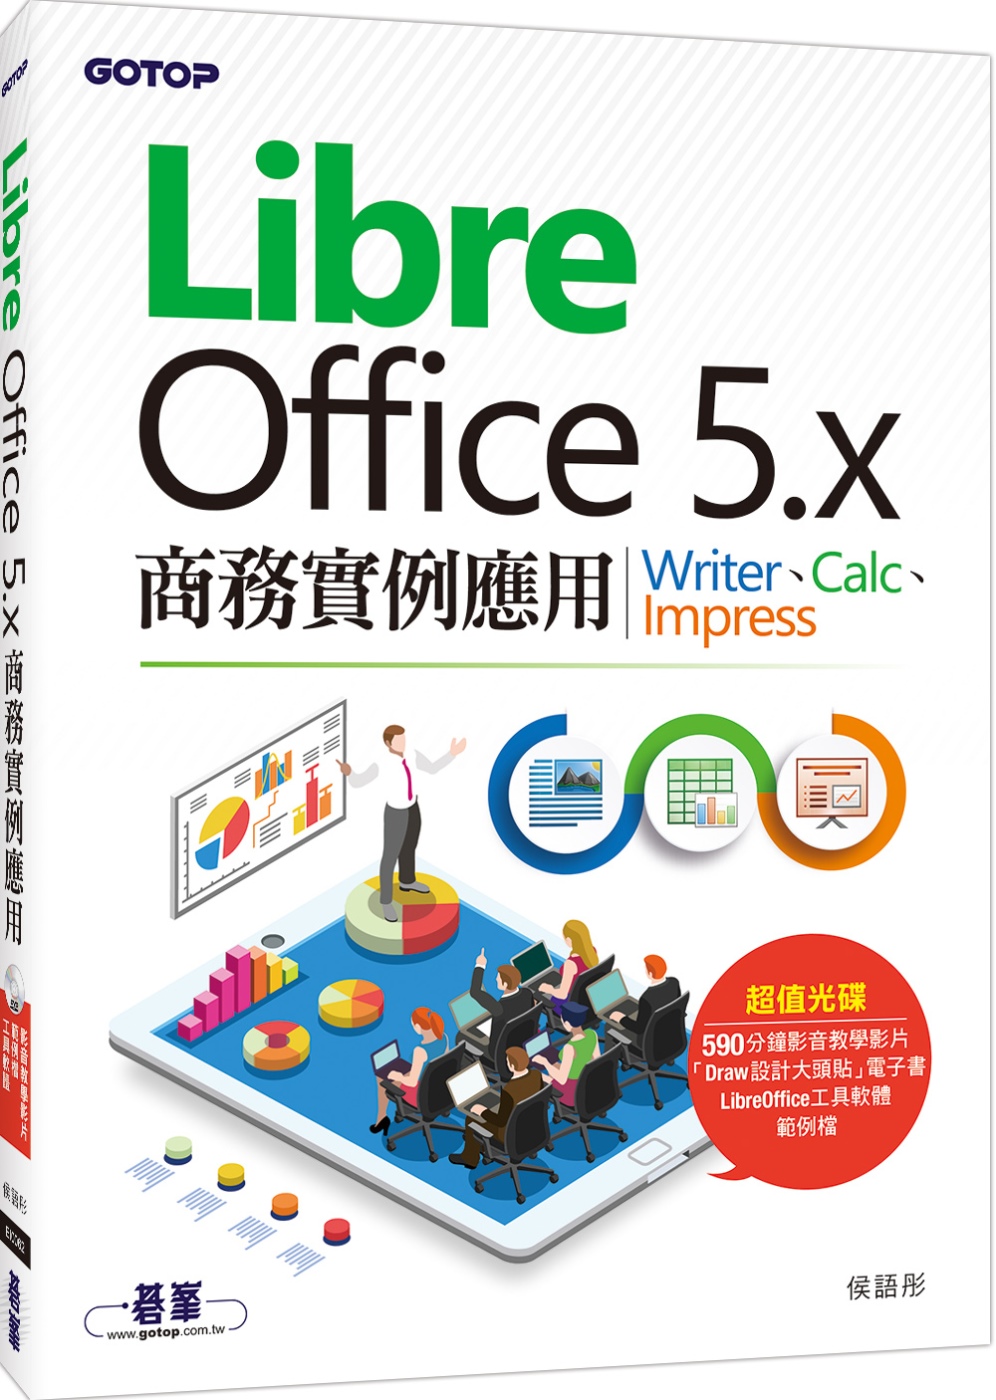 LibreOffice 5.x商務實例應用-Writer、C...